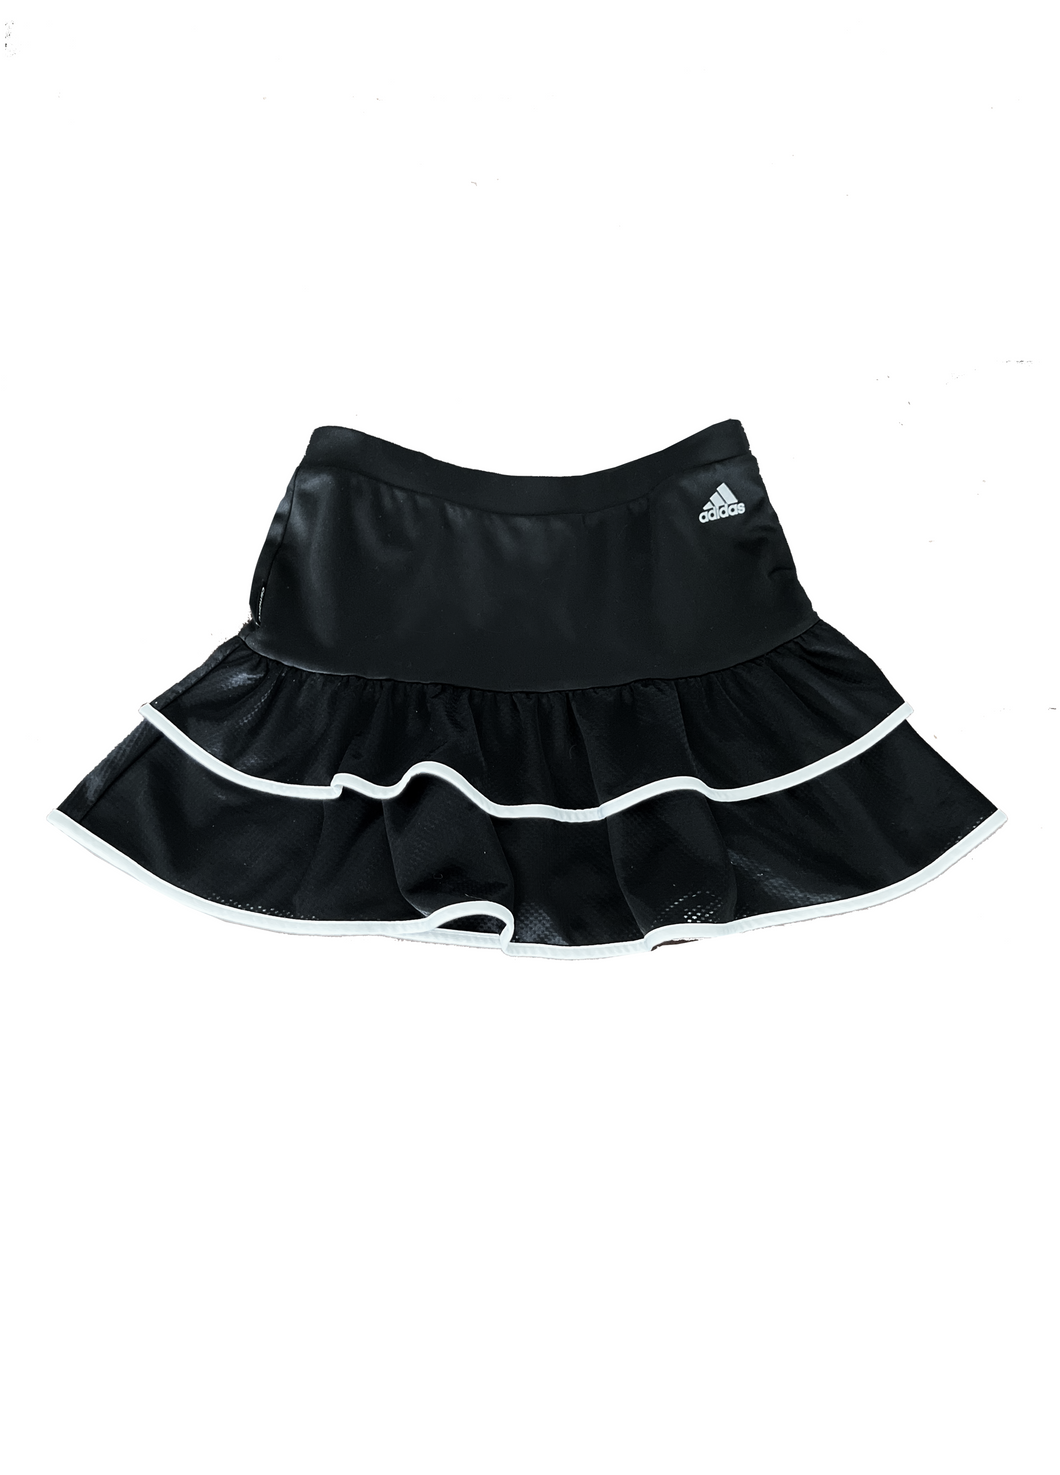 Adidas Vintage Black Frill Sports Skirt